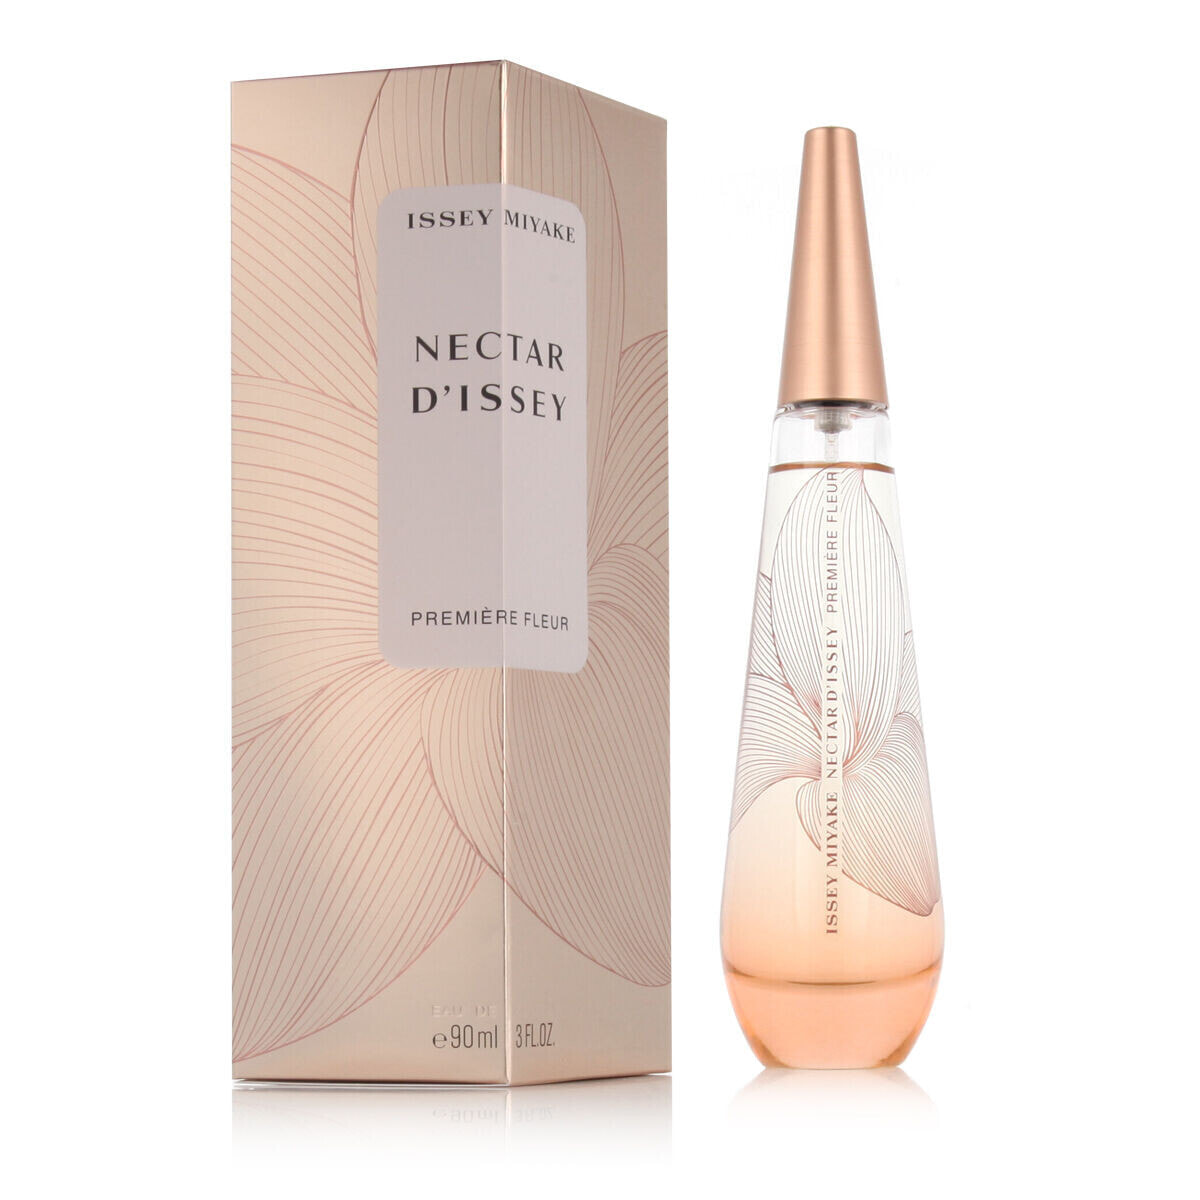 Женская парфюмерия Issey Miyake EDP Nectar D’Issey Premiere Fleur (90 ml)